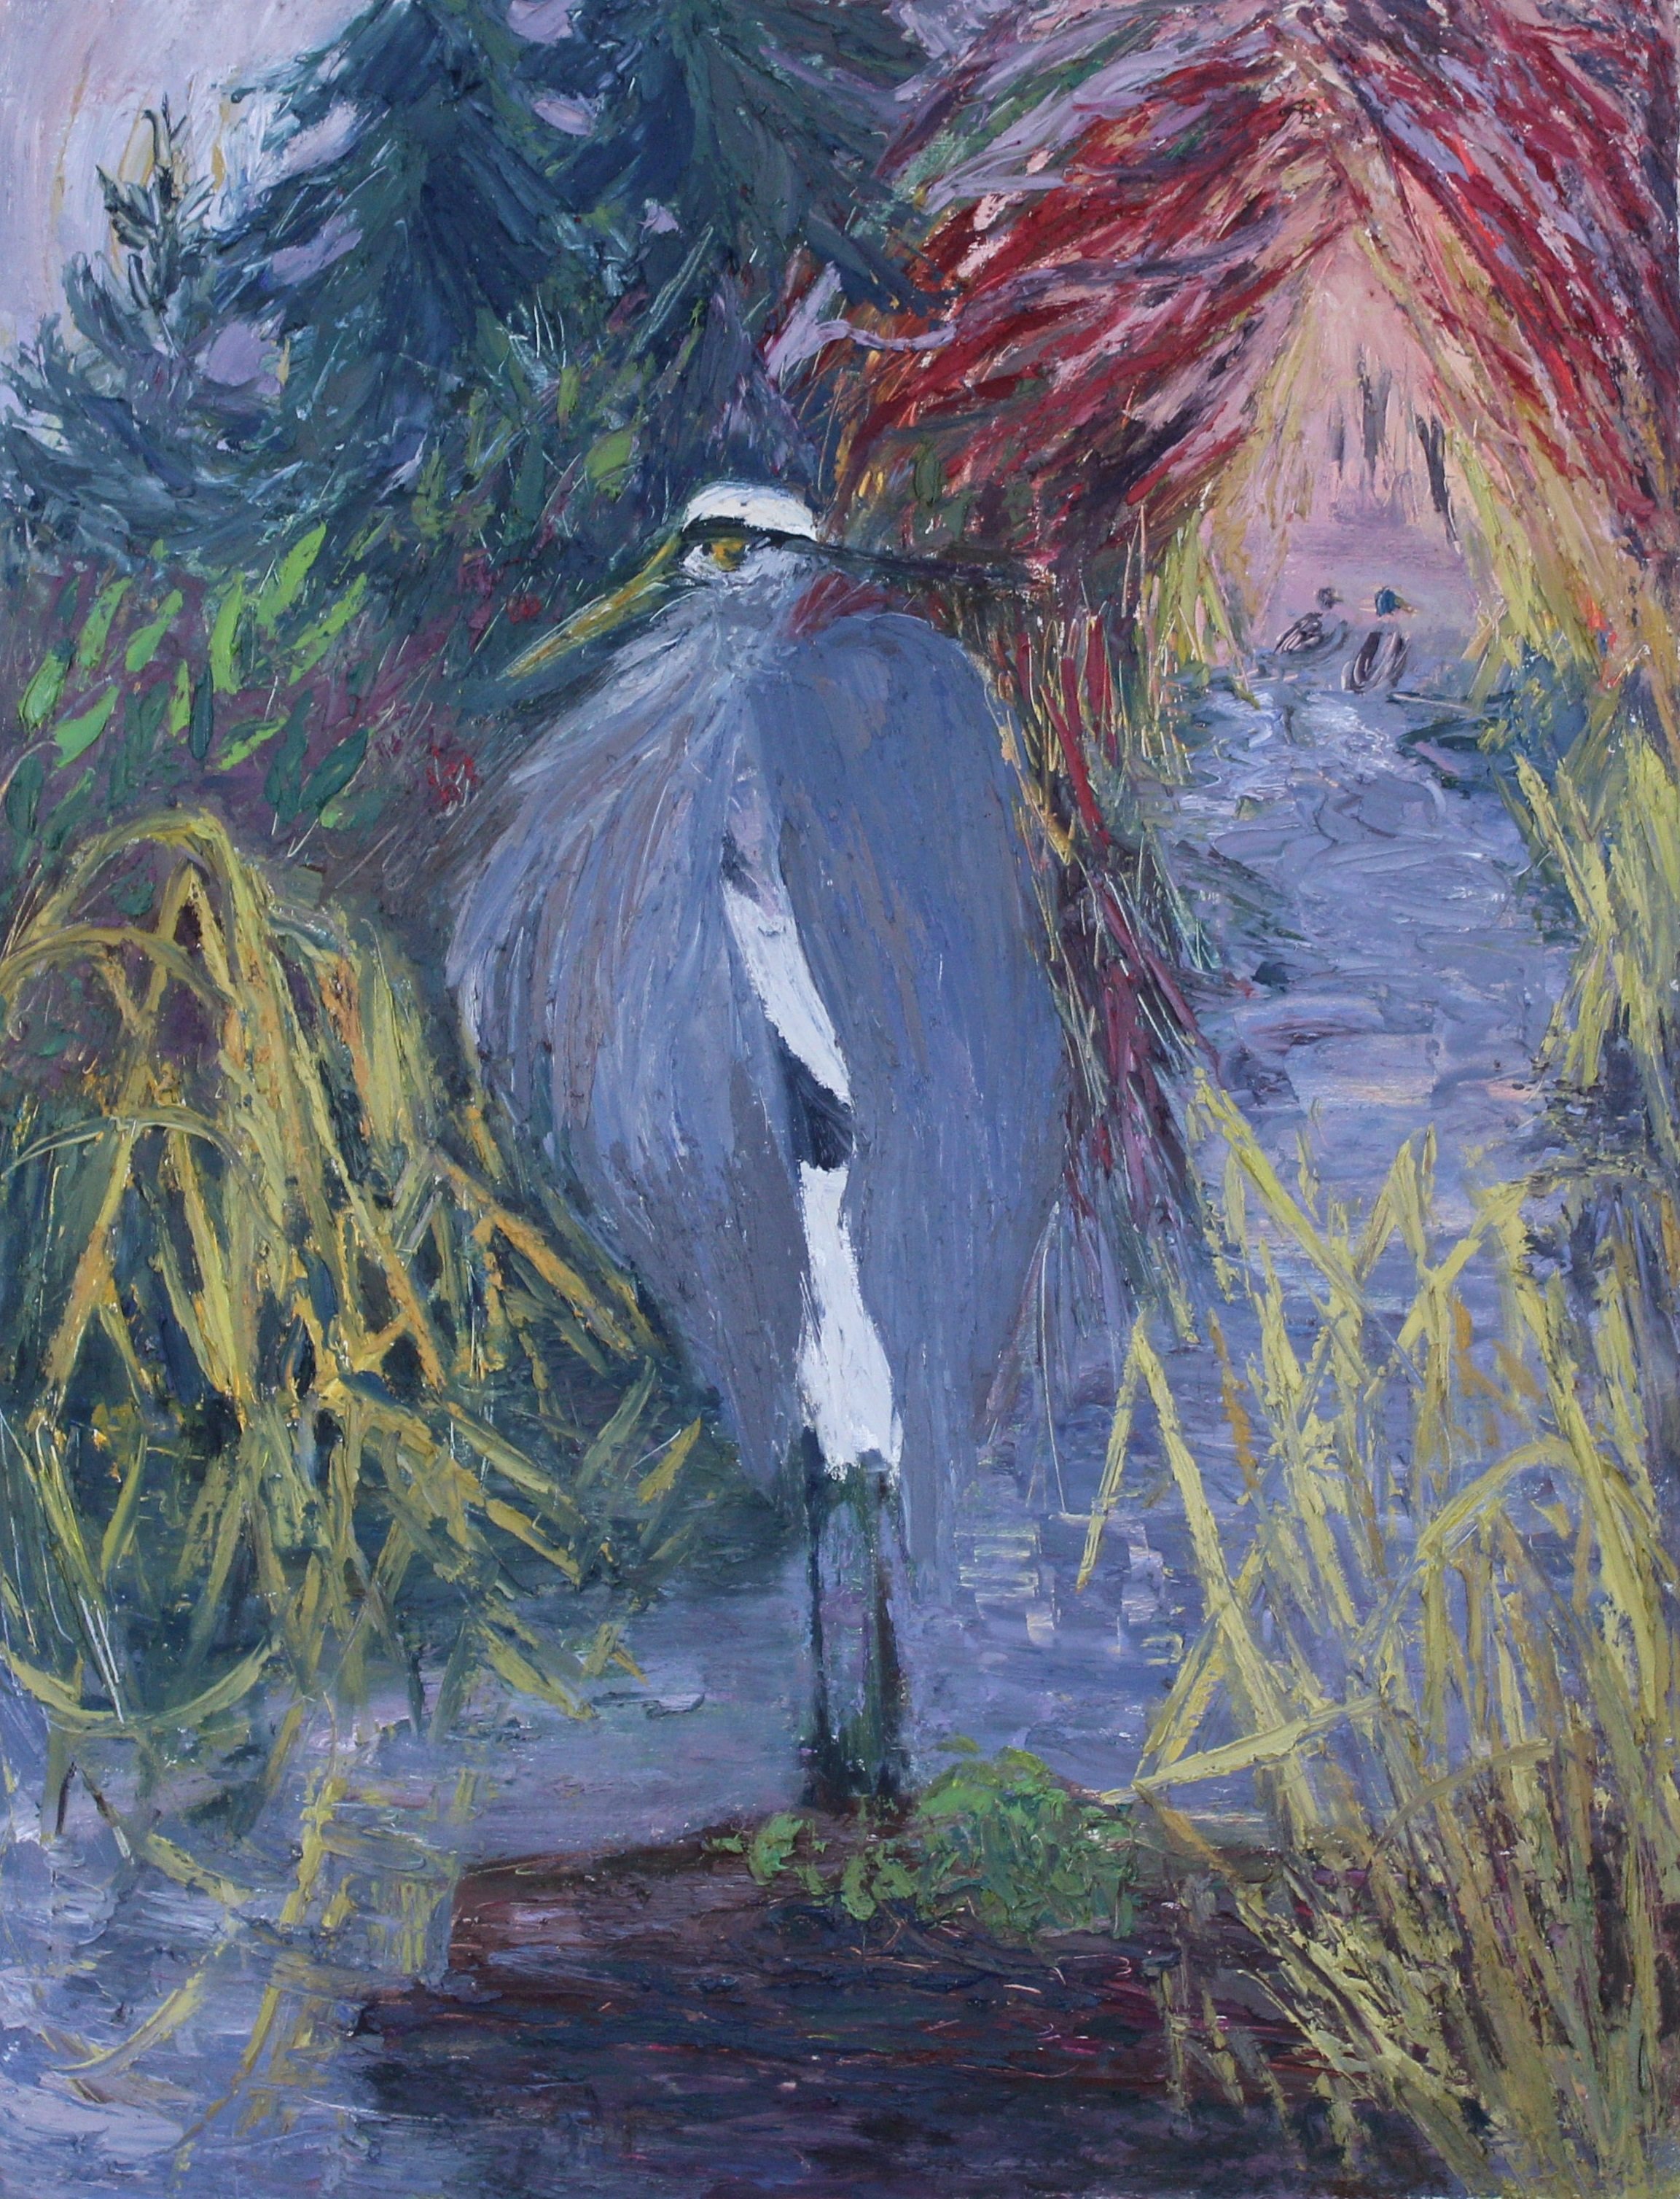 Heron in Winter, oil on panel, 31.5 x 24 in., 2022